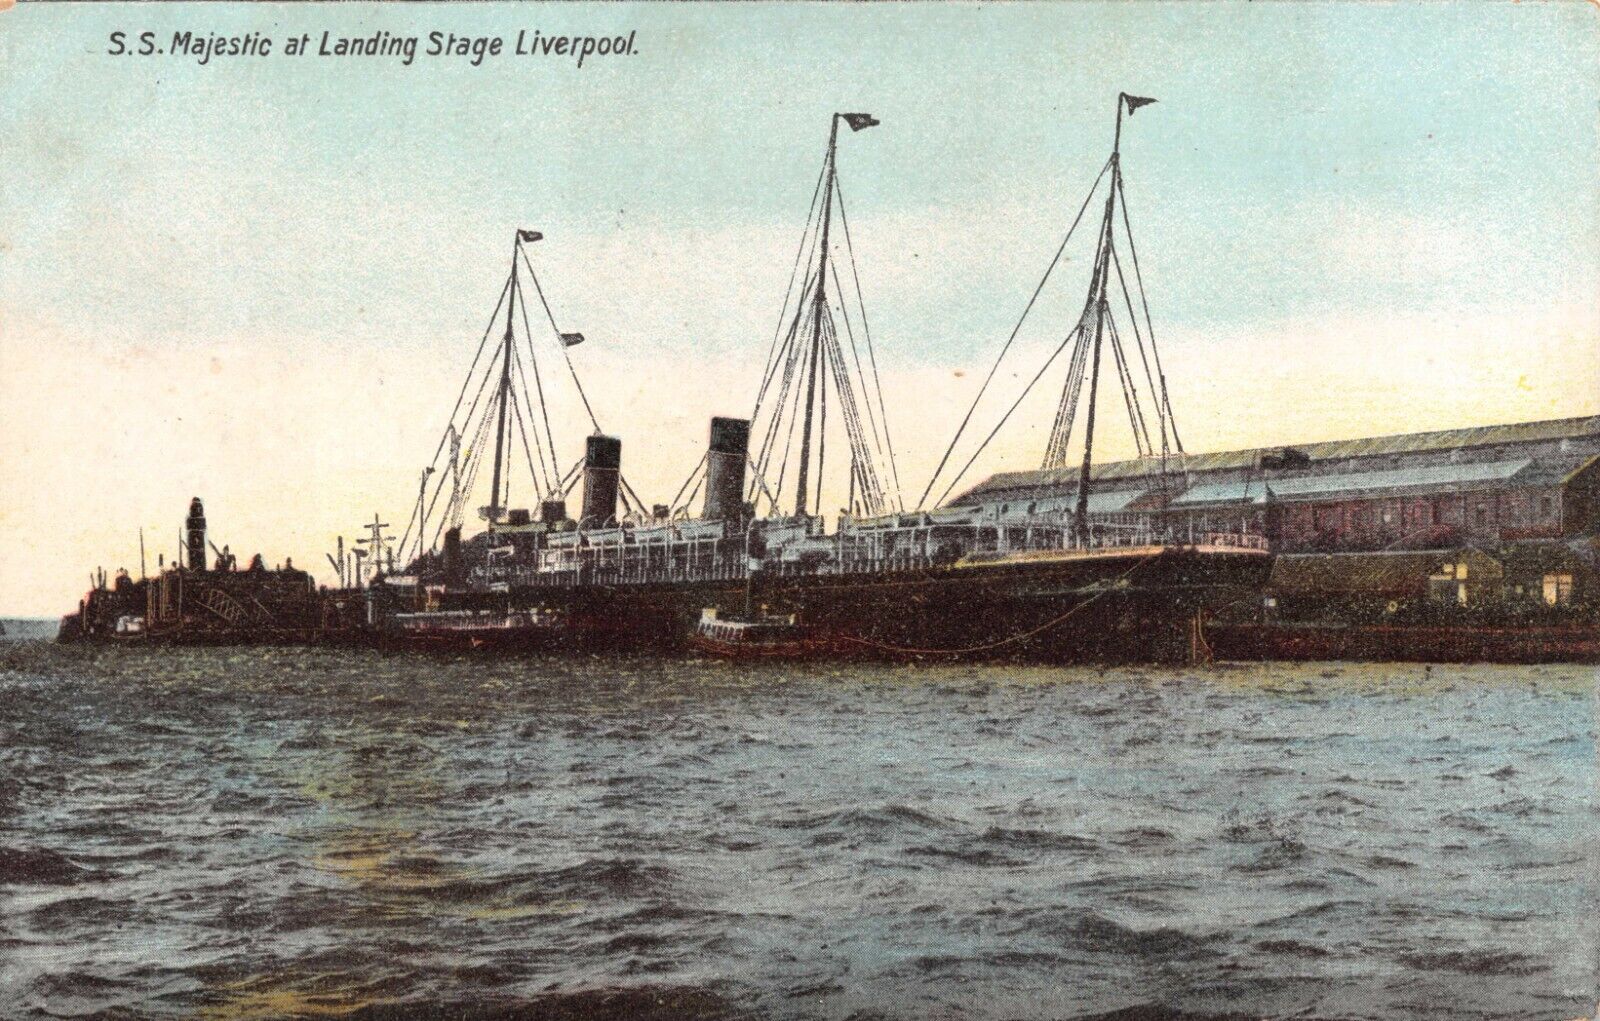 Vtg. c1906 S.S. Majestic at Landing Stage Liverpool England Postcard p1050